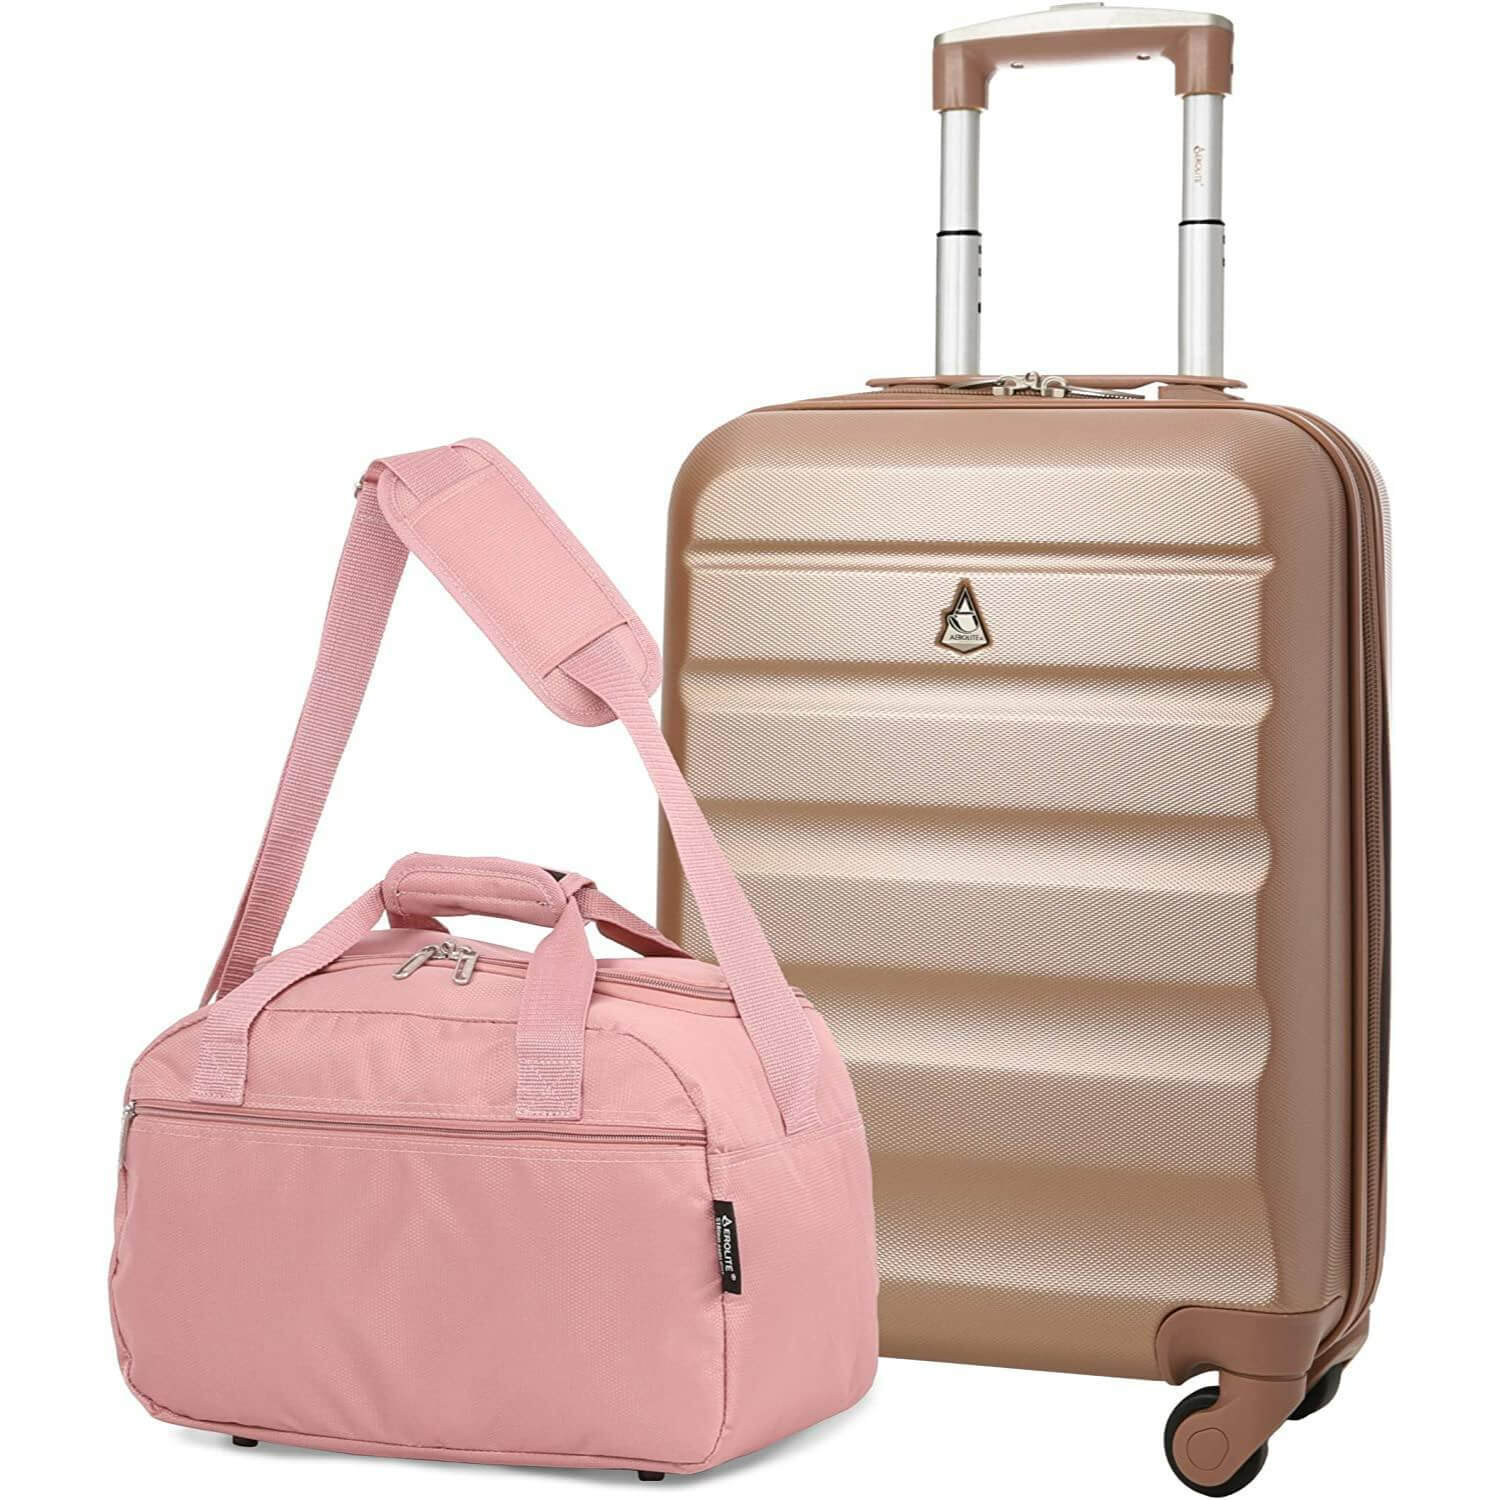 Aerolite Ryanair Bundle (55x35x20cm) Lightweight ABS Hard Shell Travel Carry On Cabin Suitcase + (40x20x25cm) Ryanair MAXIMUM Sized Holdall Cabin Bag